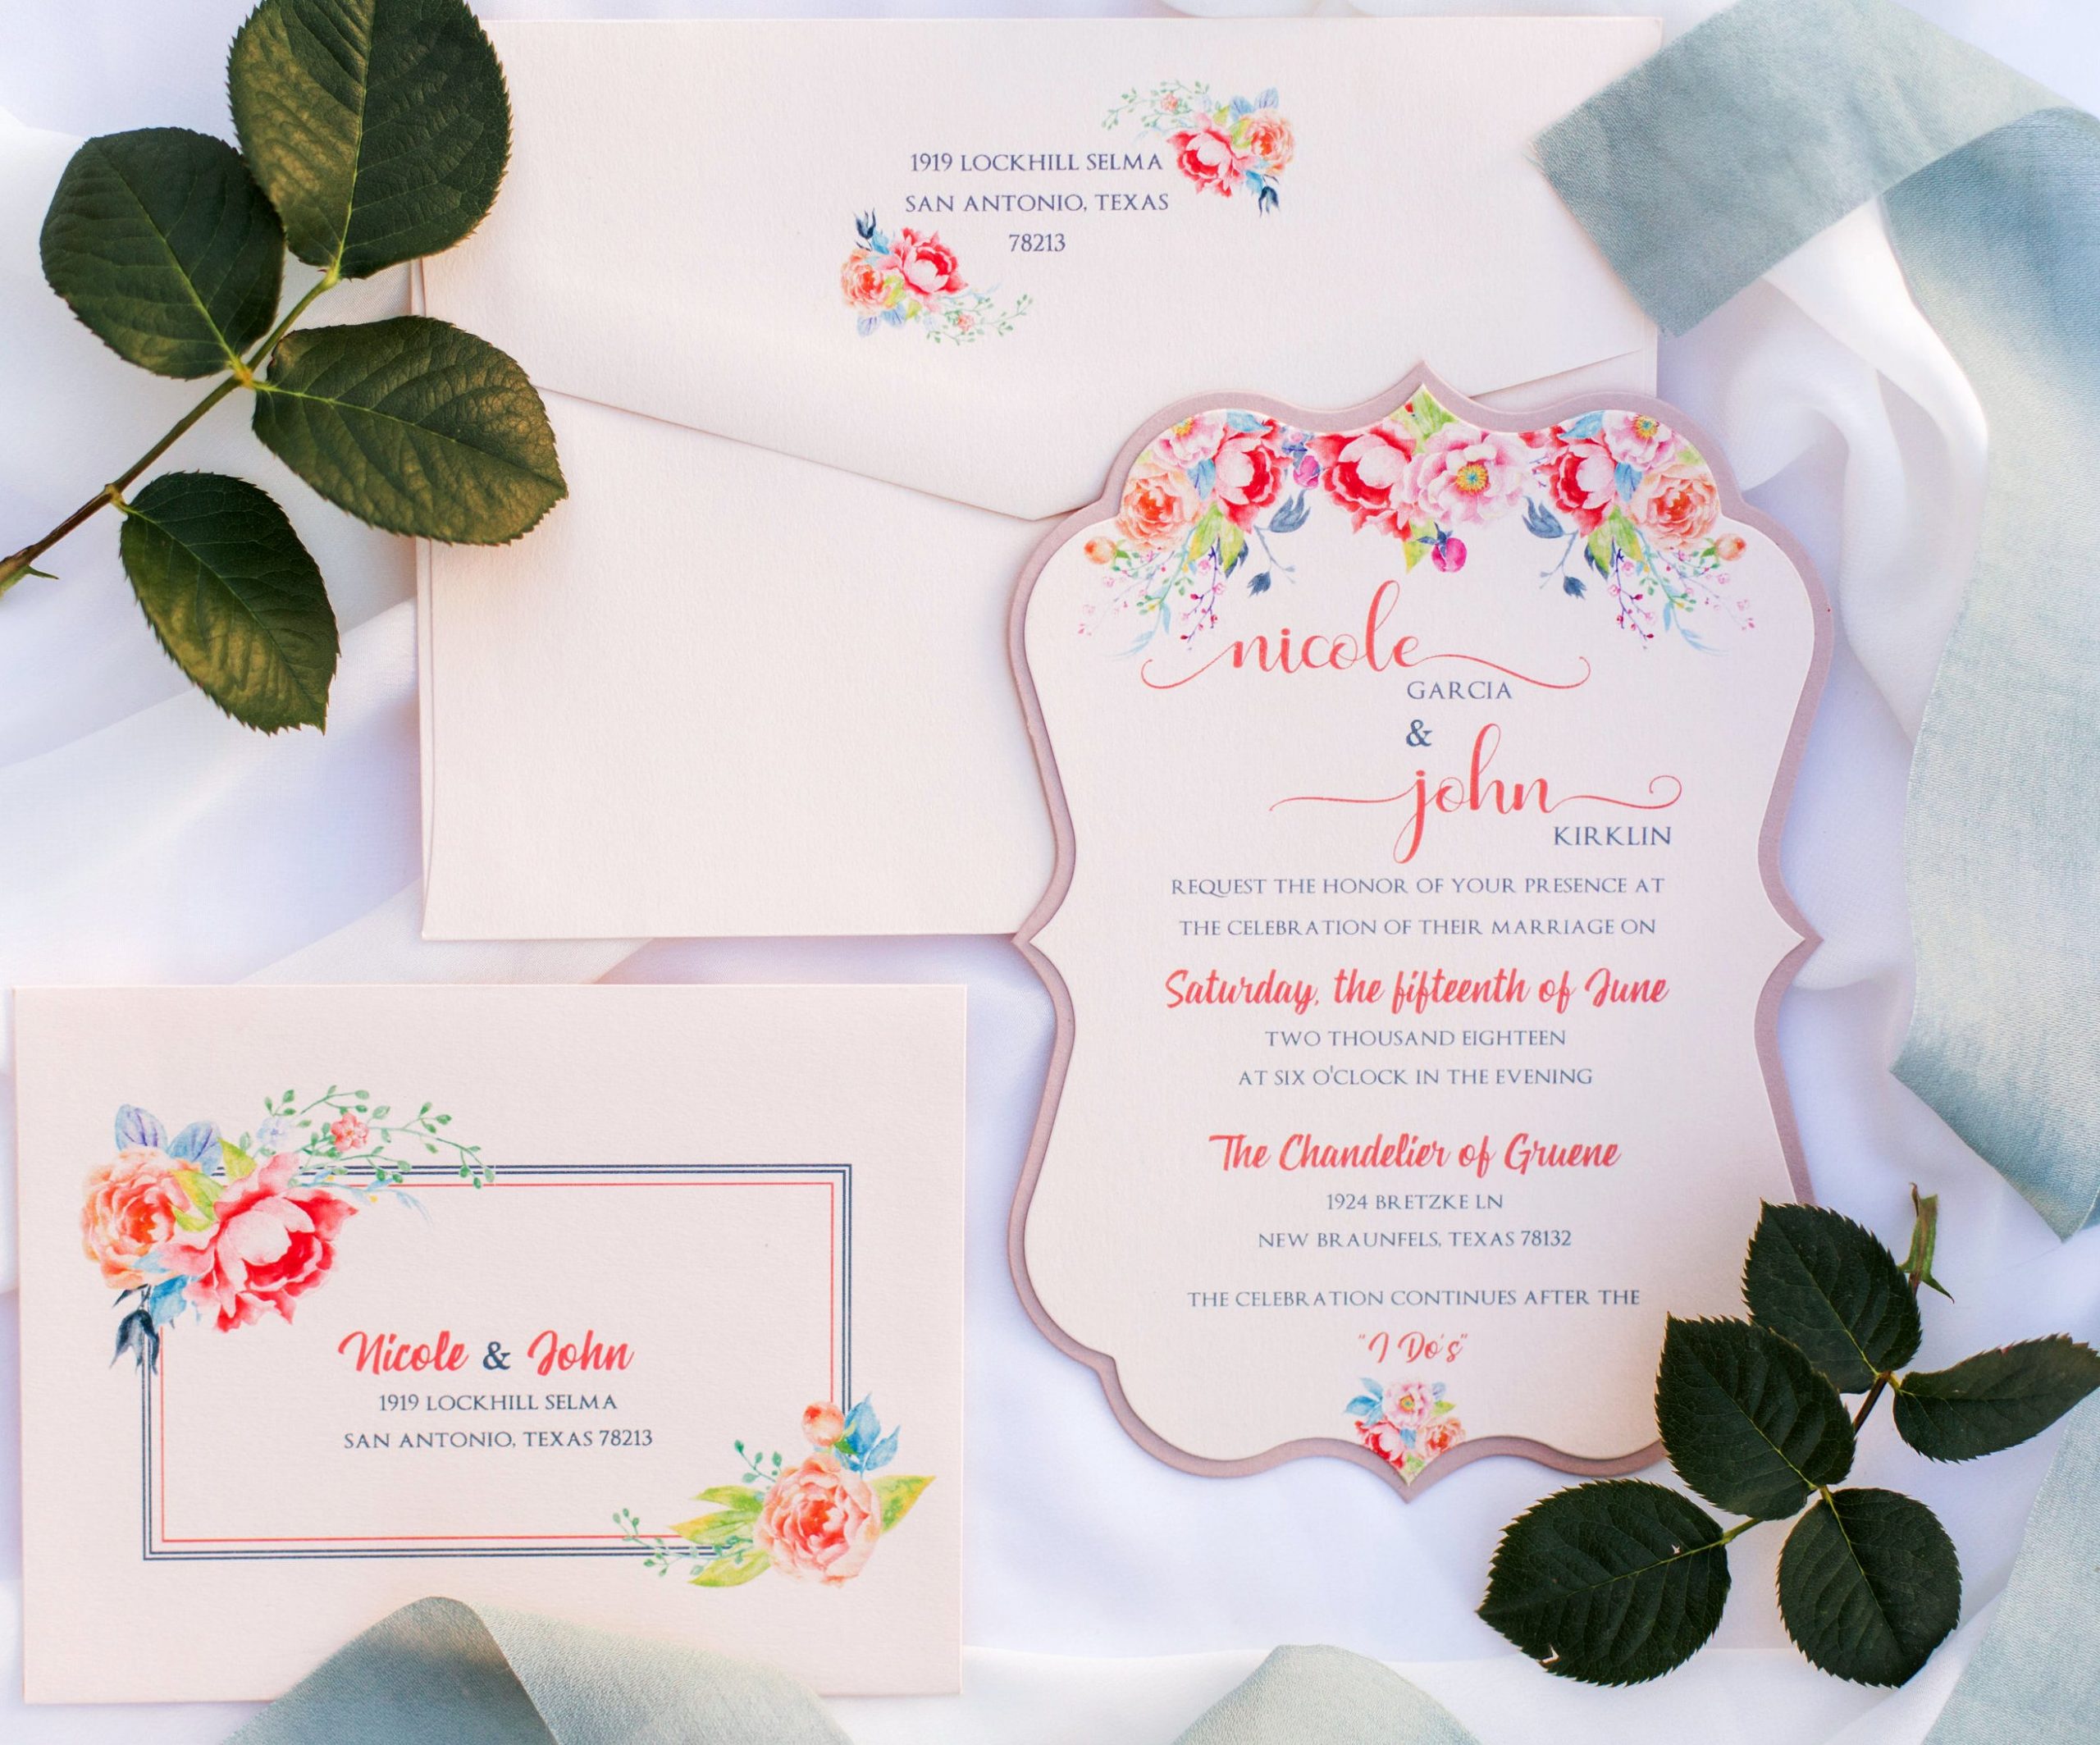 Watercolor floral wedding invitations for Texas weddings.